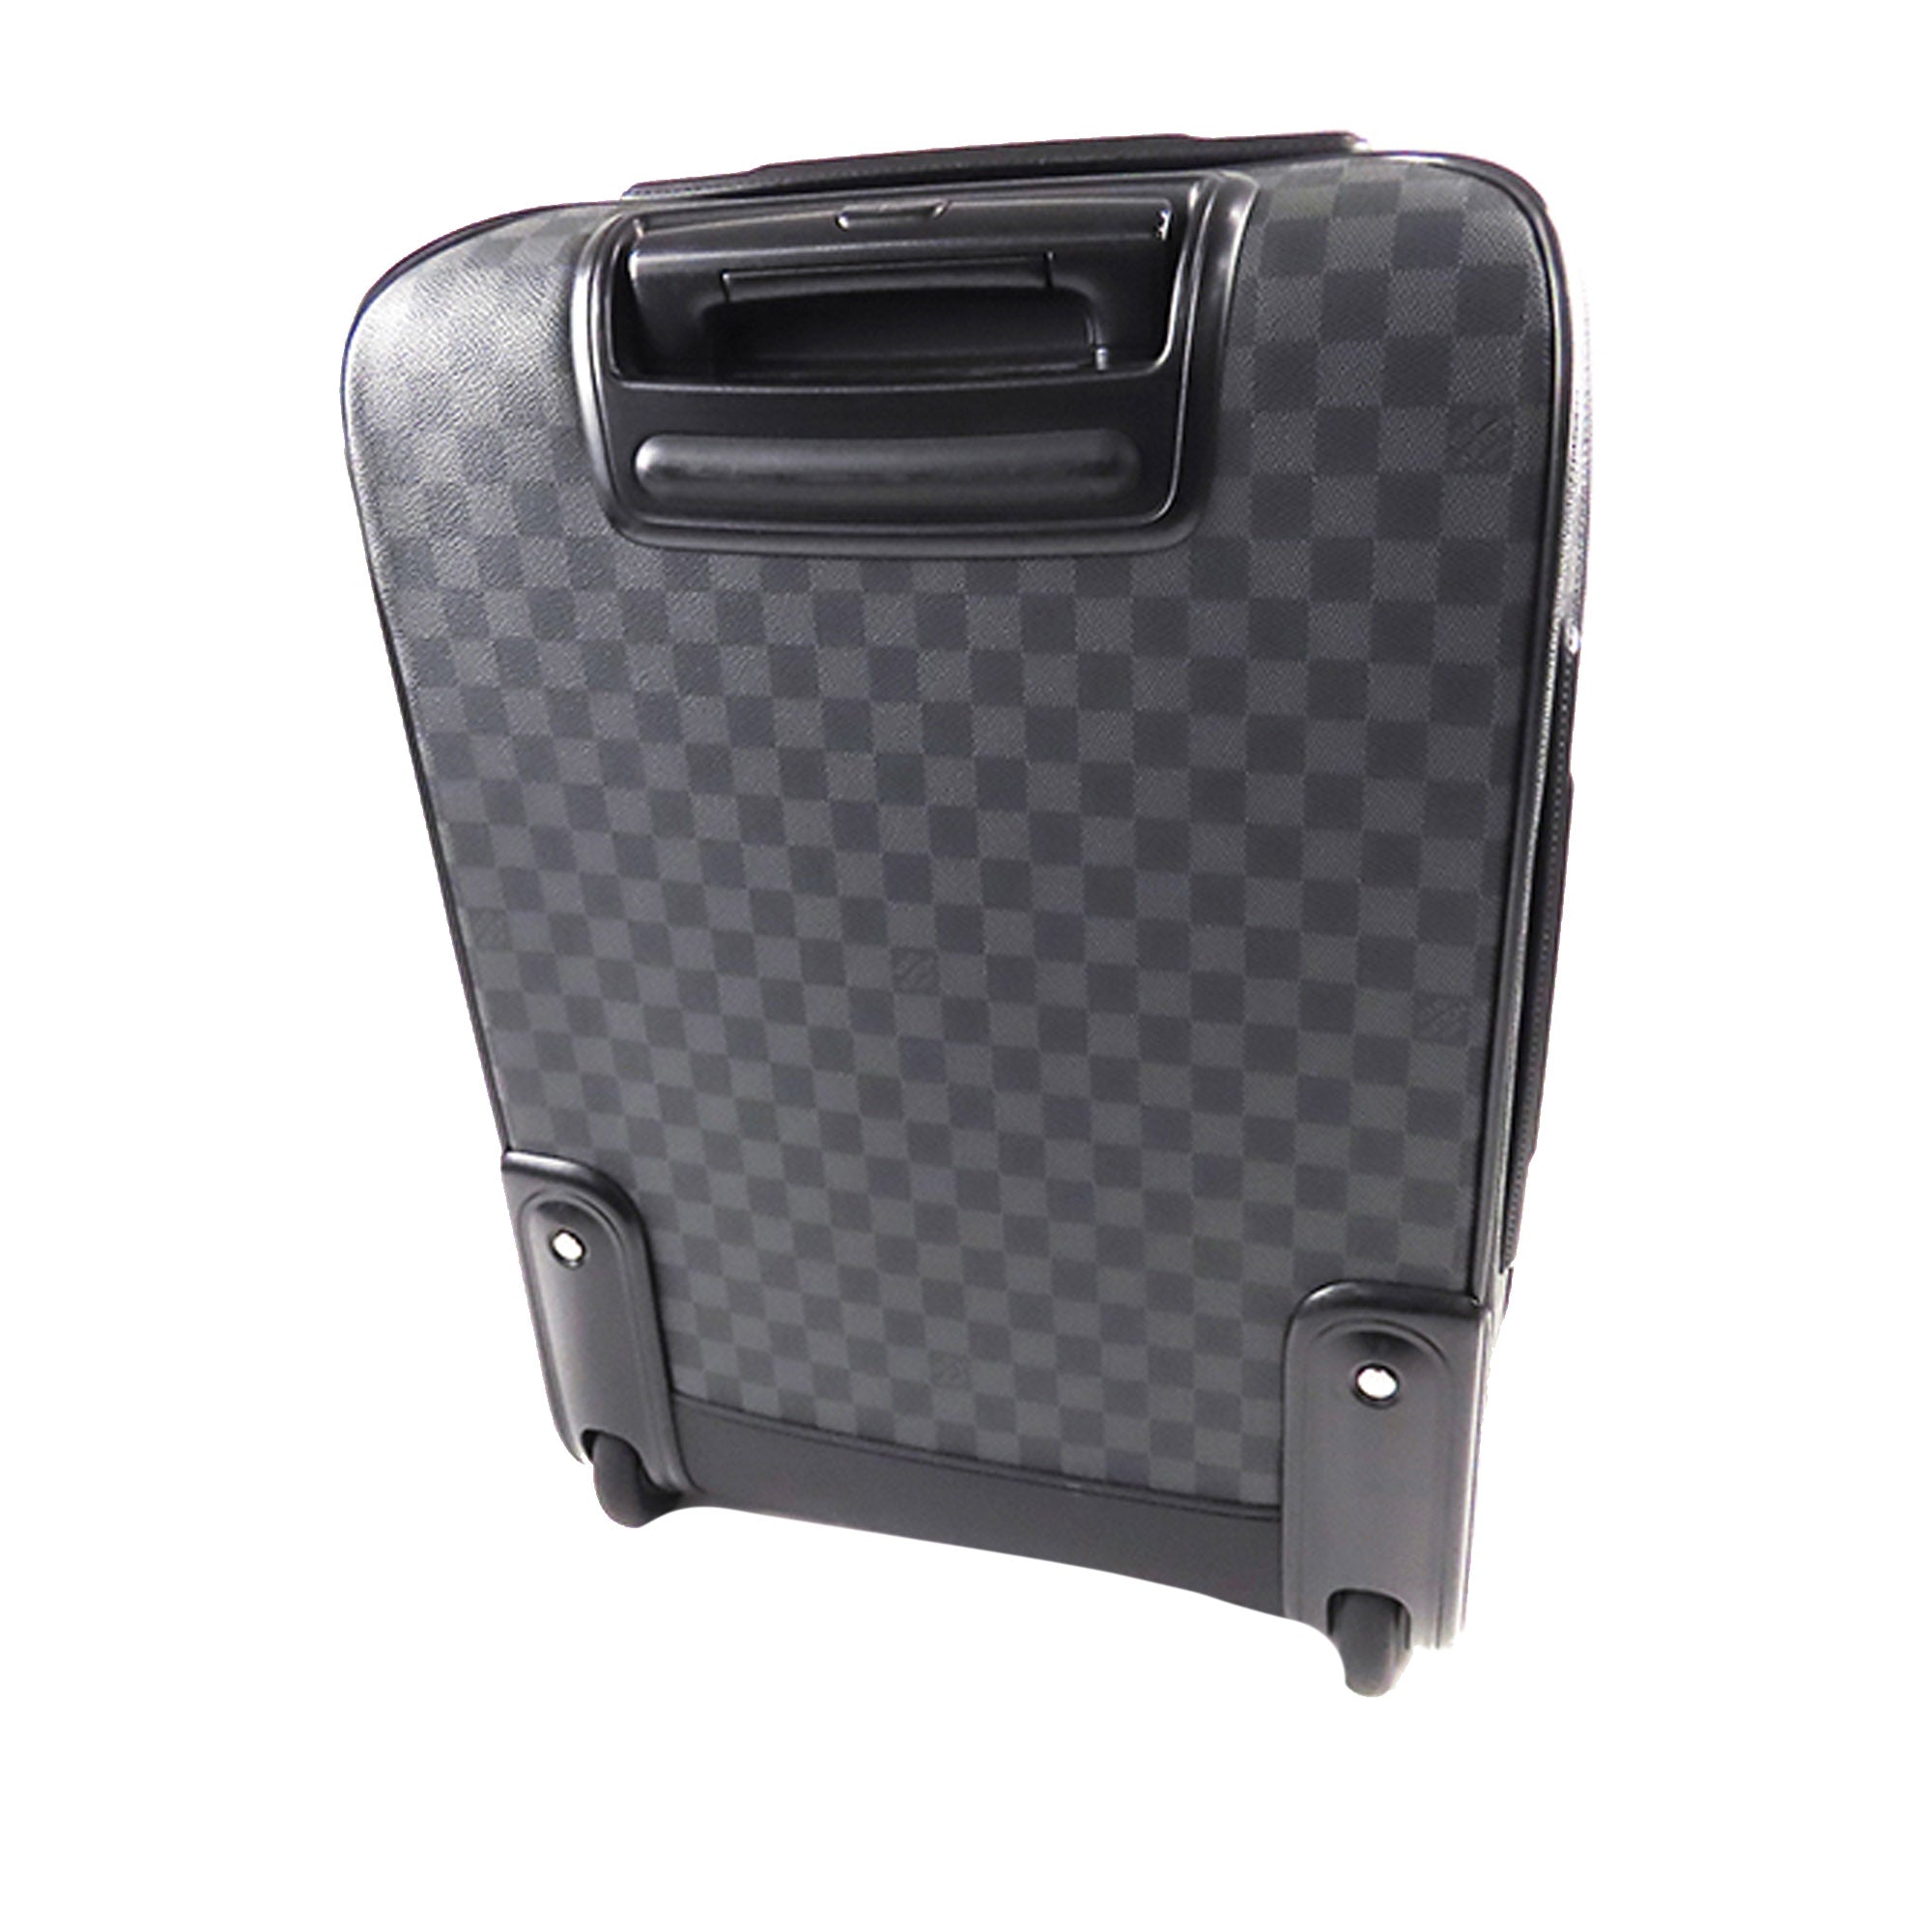 Louis Vuitton Black Designer Luggage Bag, For Travelling Purpose